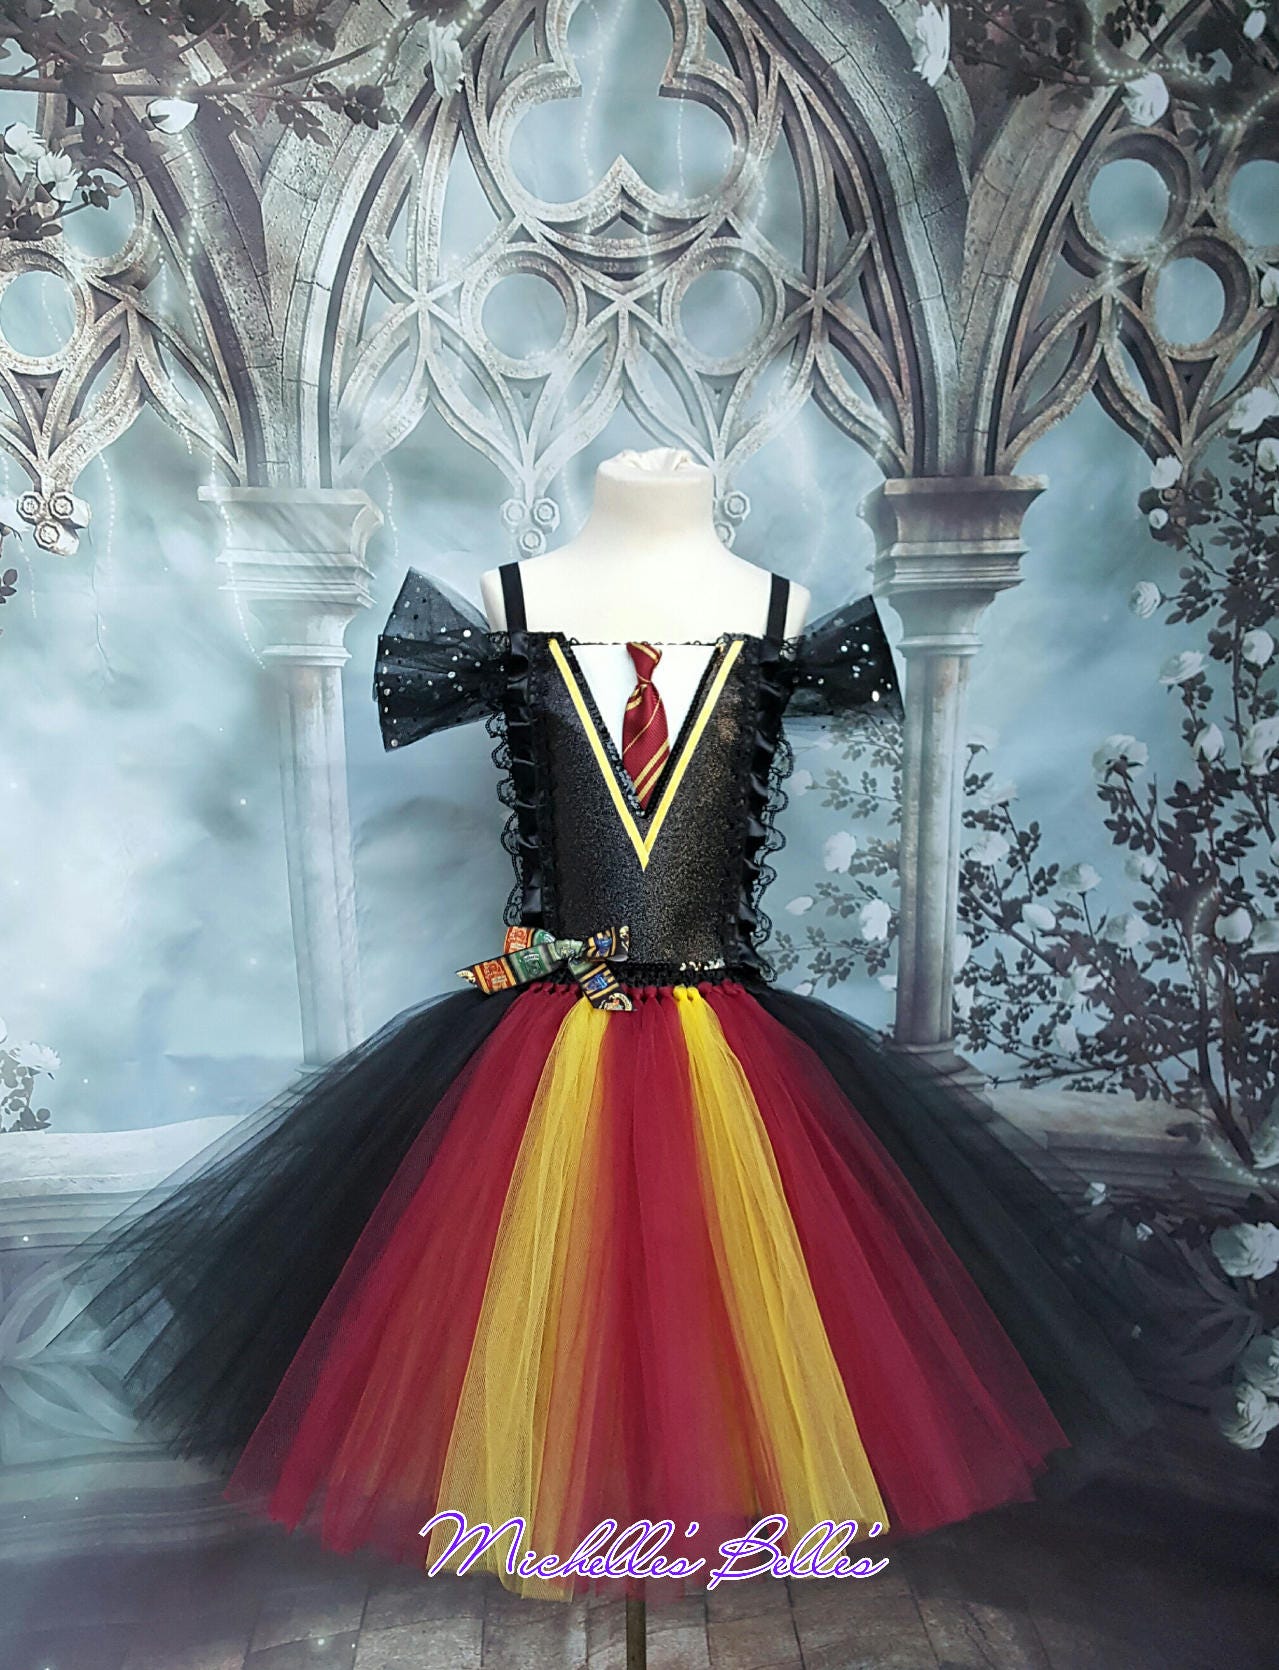 Hermione granger costume girls -  Italia